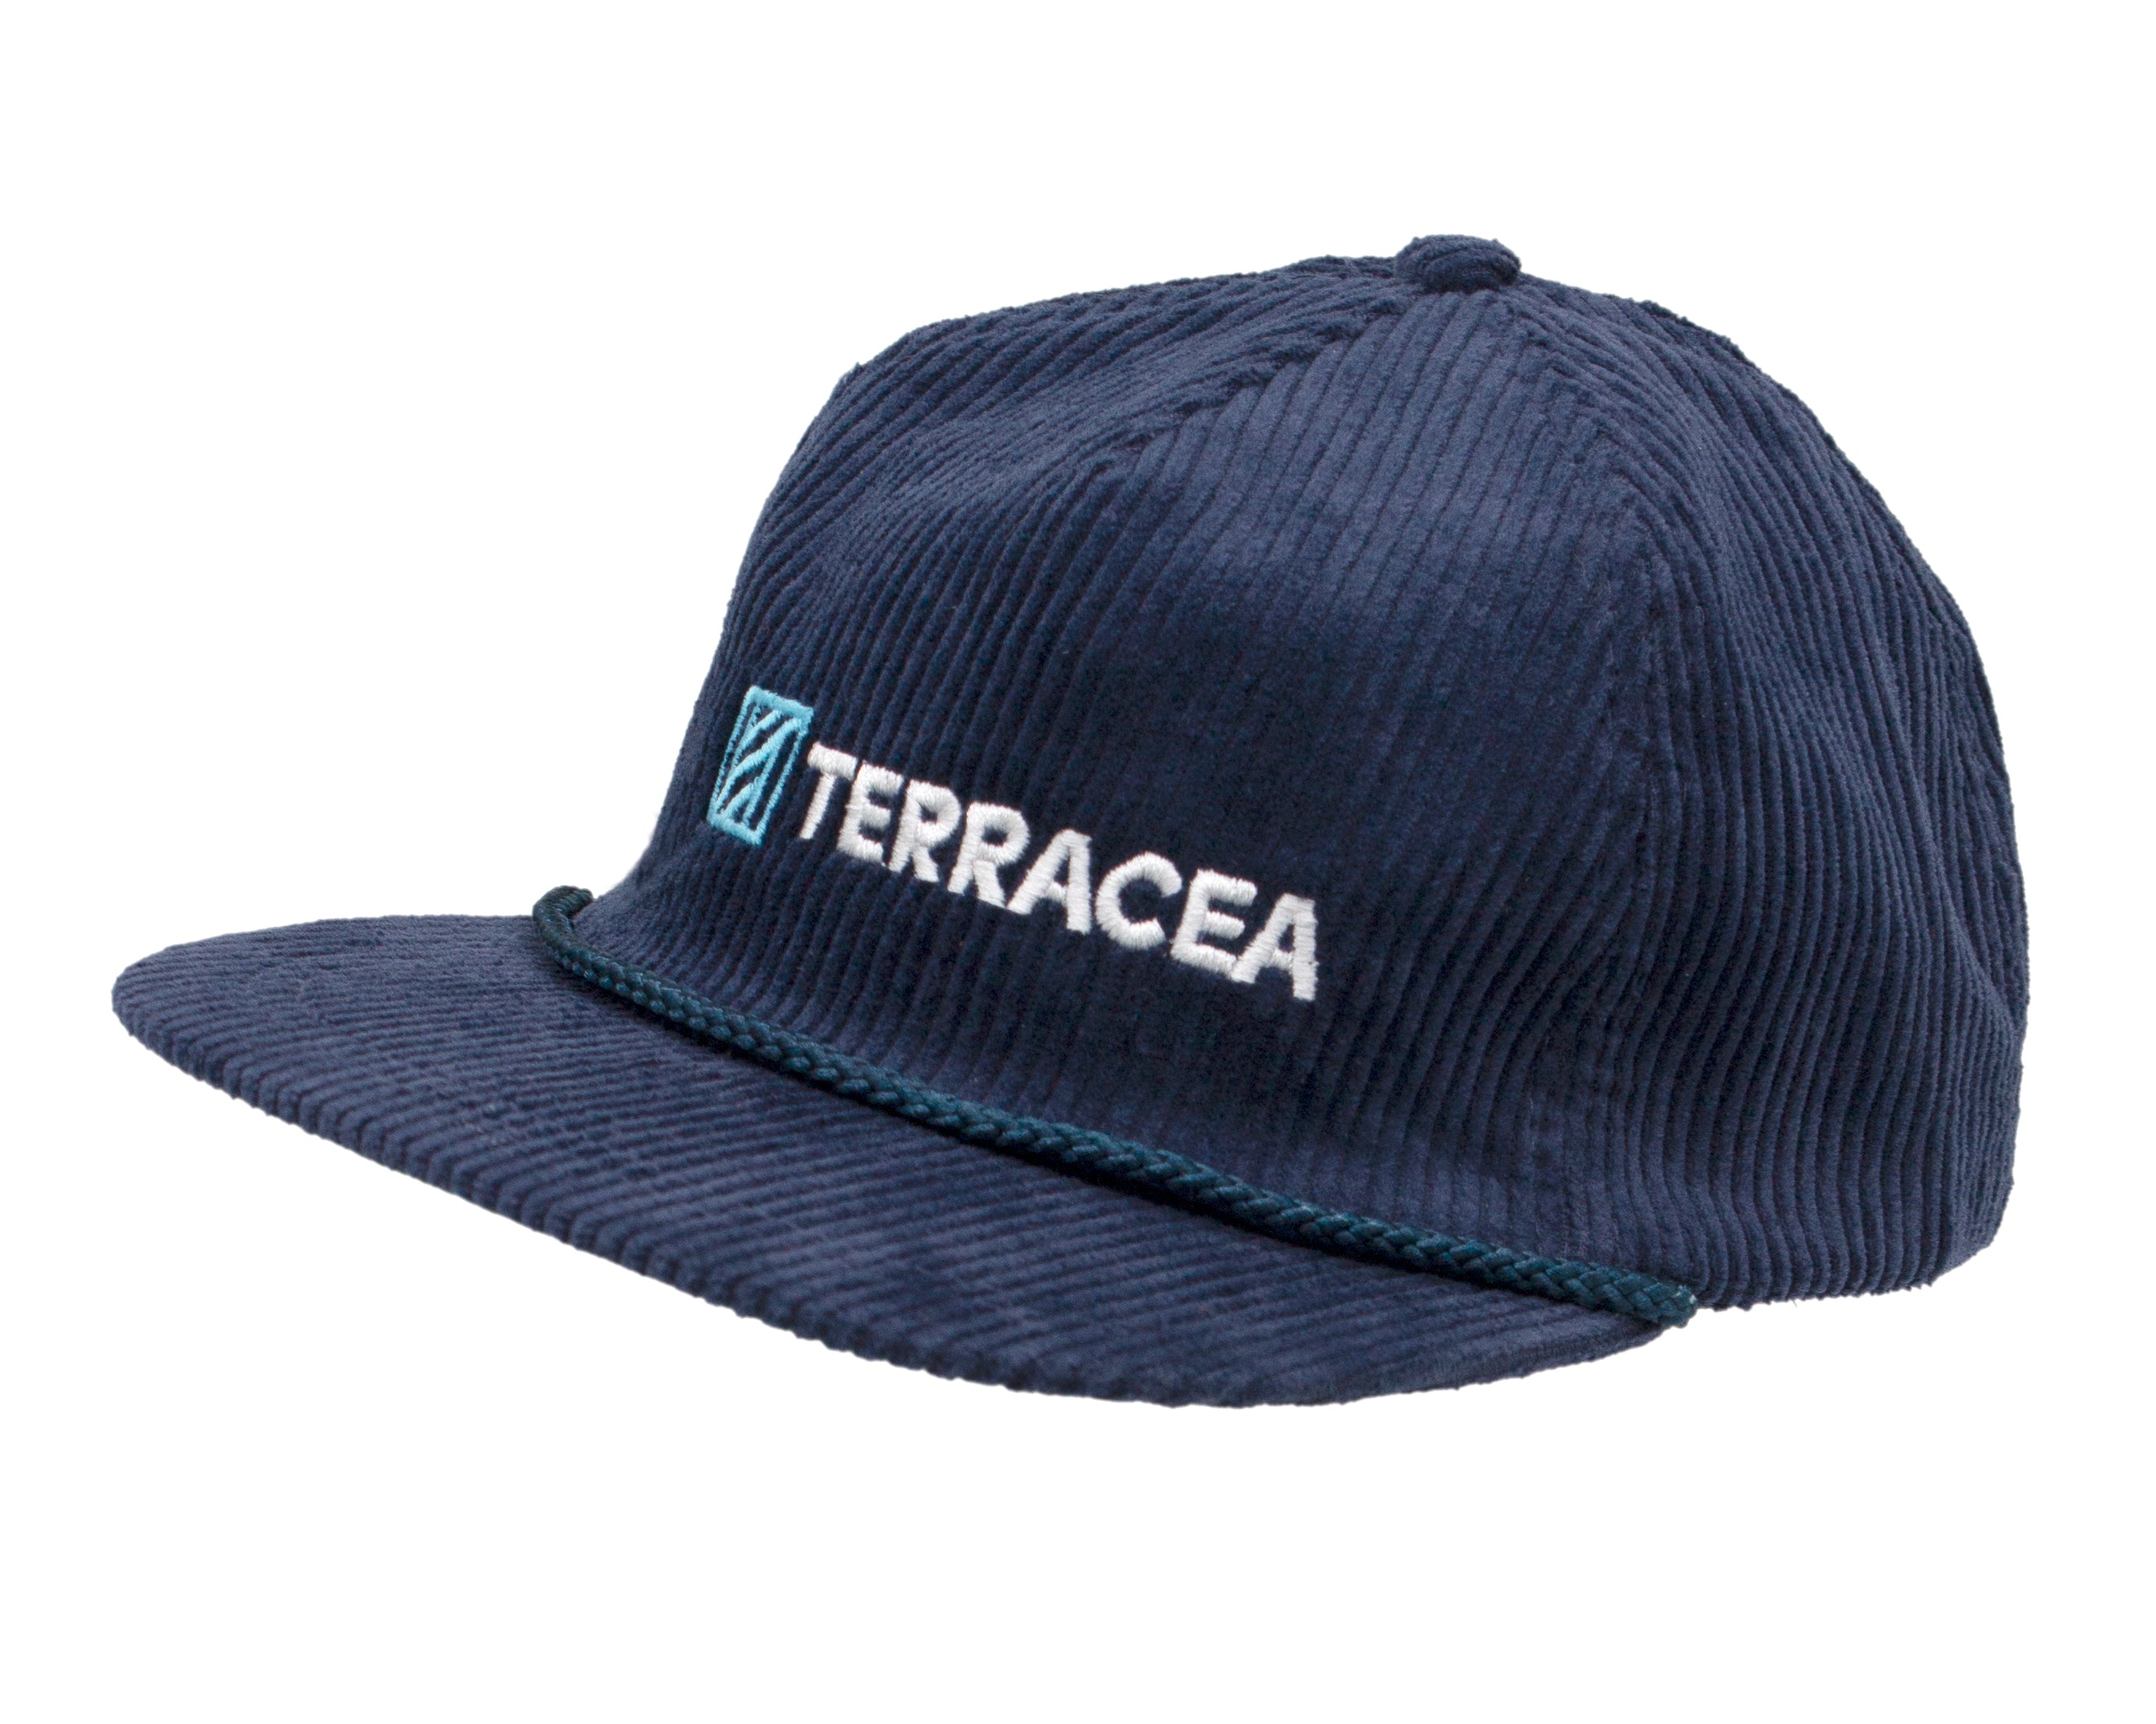 TERRACEA CORDUROY ROPE HAT